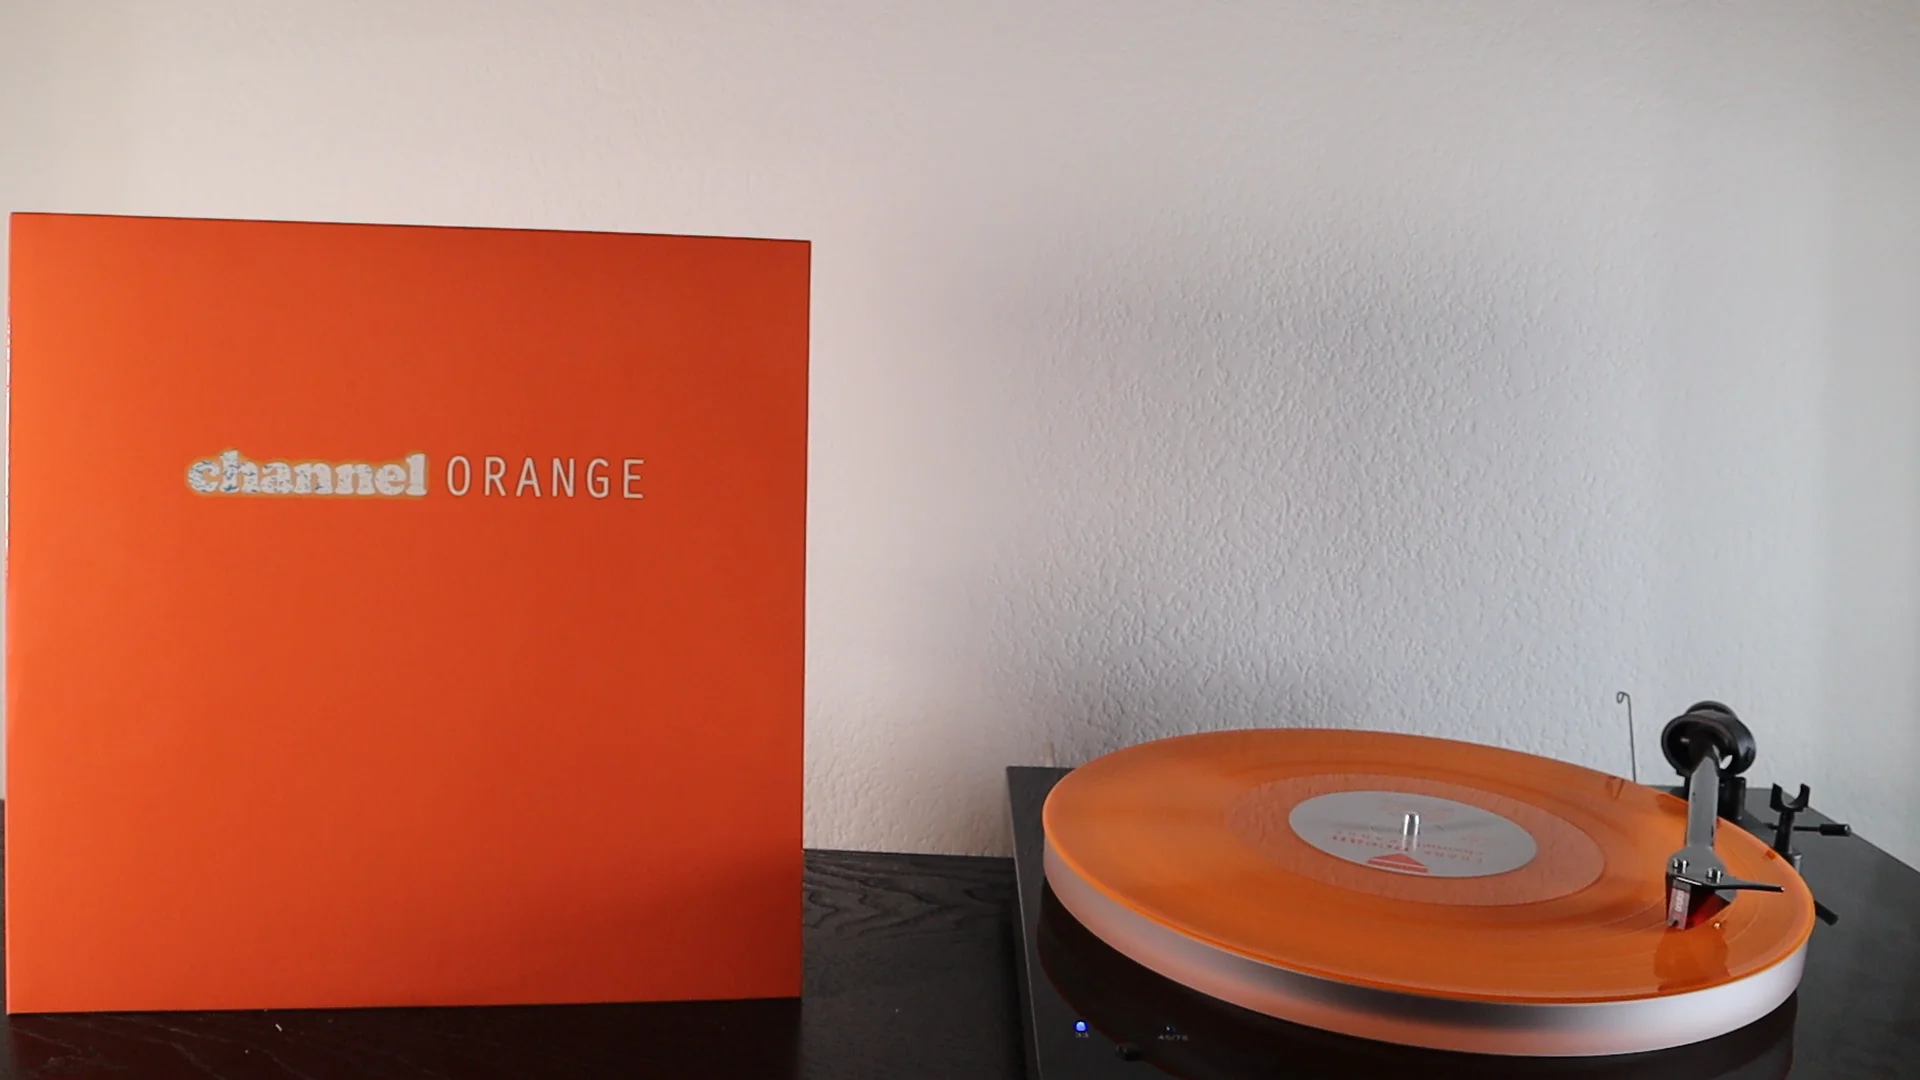 Frank Ocean - Channel Orange 2x LP - ORANGE VINYL